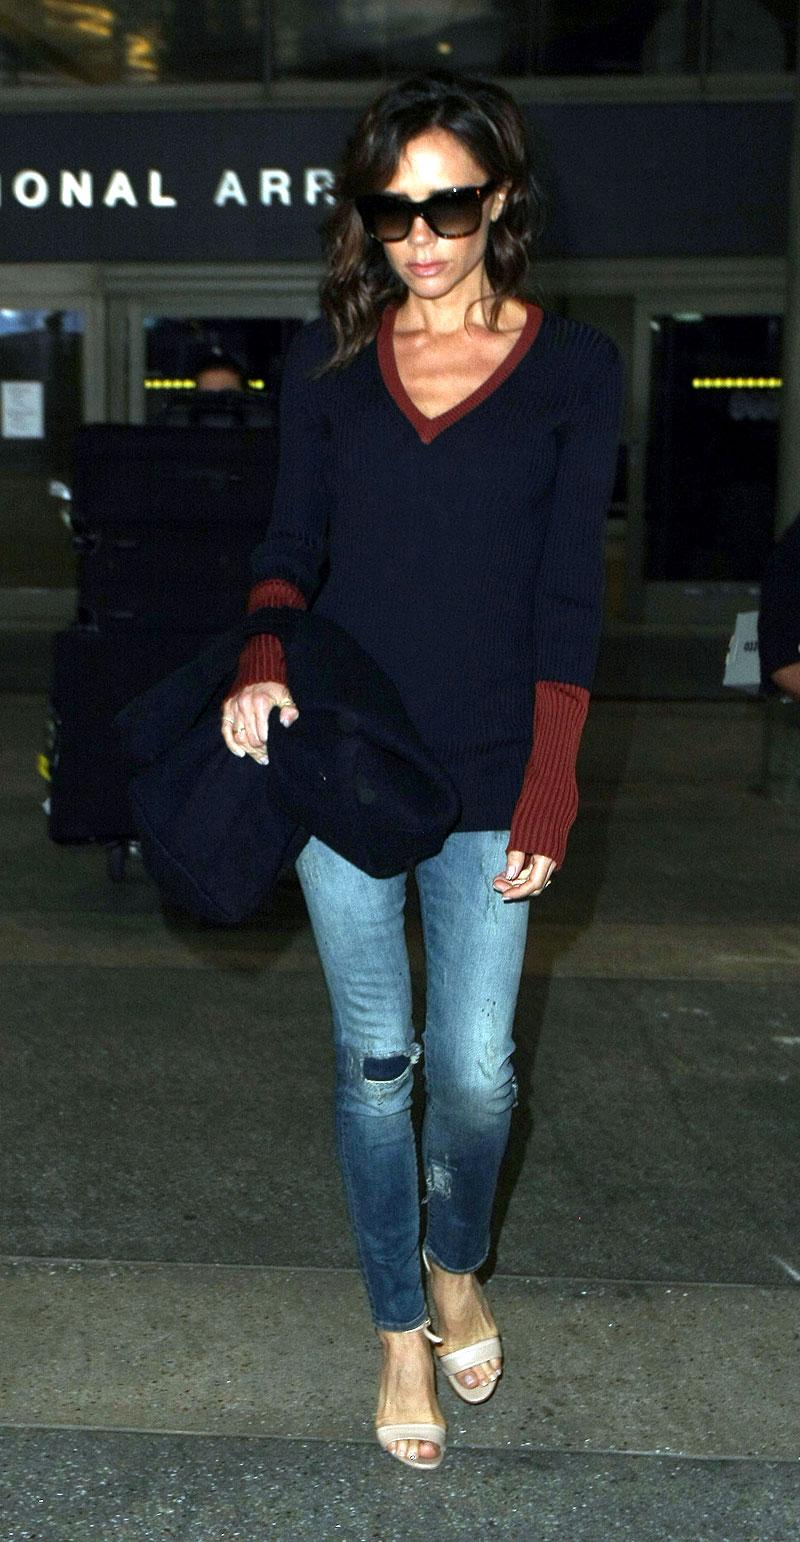 Victoria Beckham Reveals BONEY CHEST In Revealing Sweater — Is She OK?